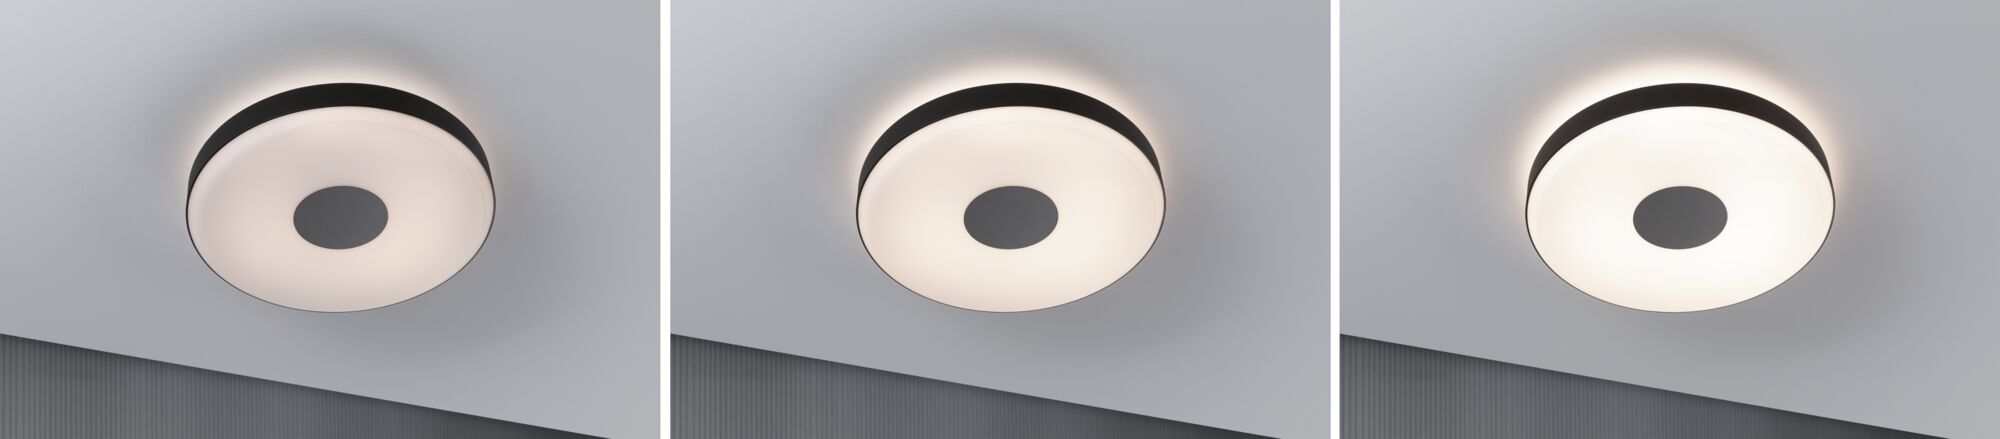 Paulmann 79778 LED Deckenleuchte Smart Home Zigbee Puric Pane Effect  warmweiß 1,5W dimmbar Schwarz/Grau